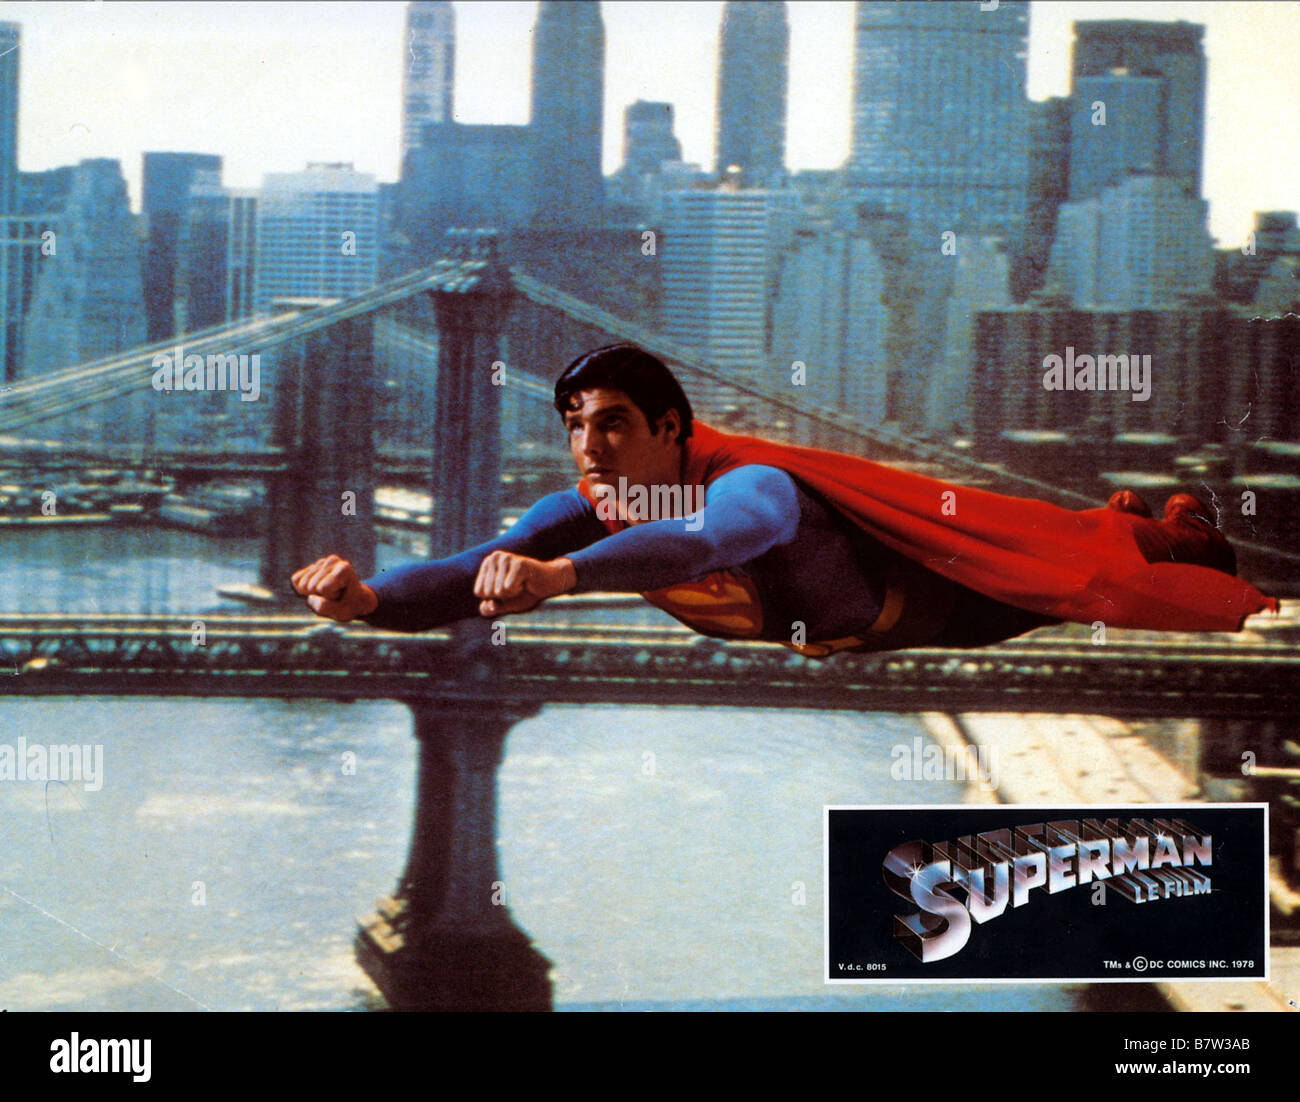 Donner superman richard Superman II: